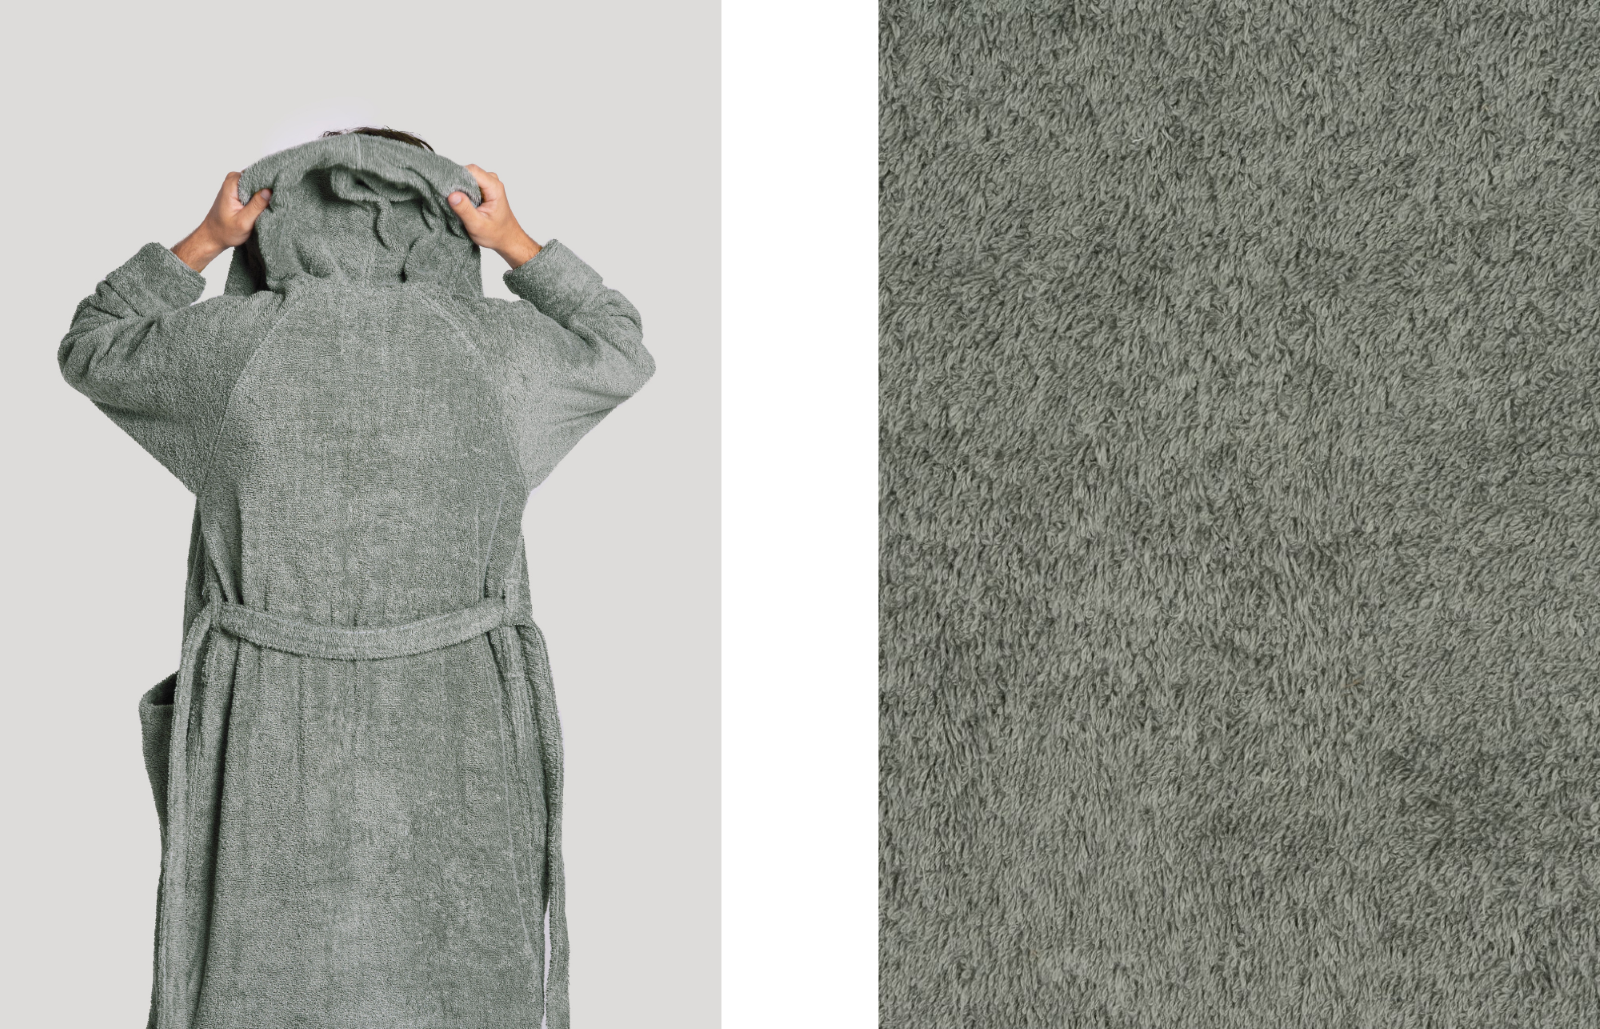 Our Confident Green bathrobe, Serious Cotton bath mat and Confident Hemp towel all feature the Pantone shade 16-5515 TPG.